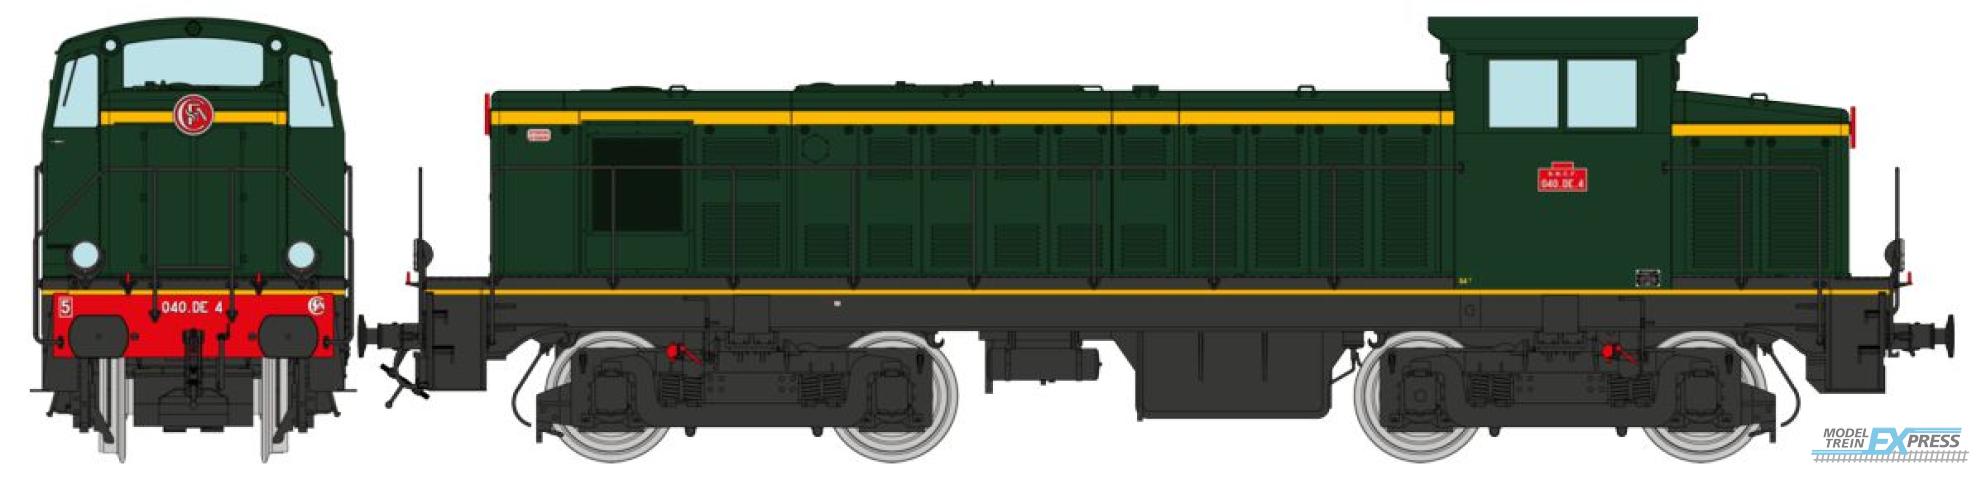 REE models JM-012S Diesel Locomotive 040 DE 04 origin, South East, Era III - DCC SOUND